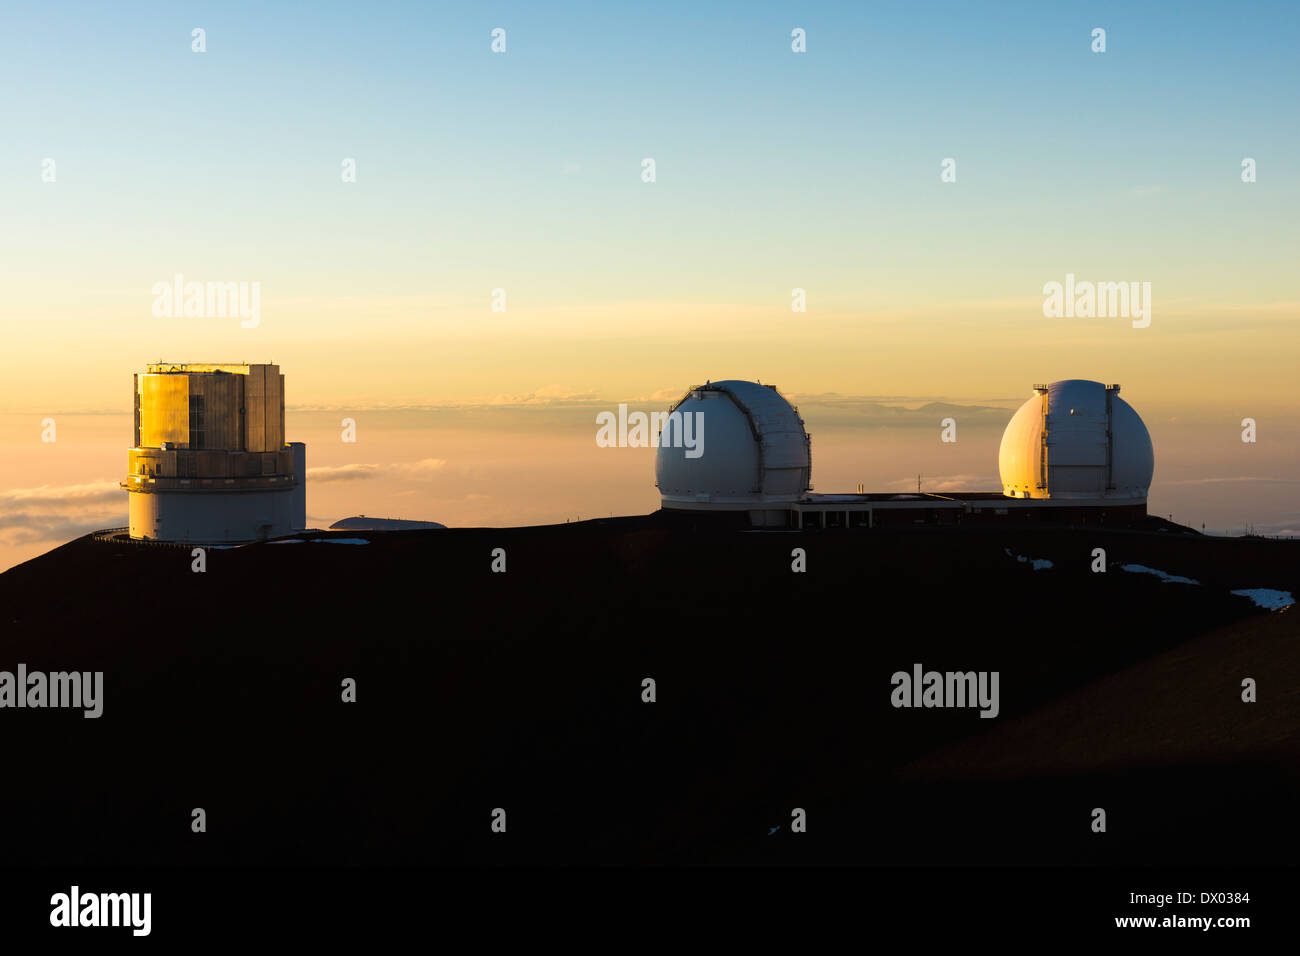 Teleskope am Mauna Kea Gipfel kurz vor Sonnenuntergang. Big Island von Hawaii. Stockfoto